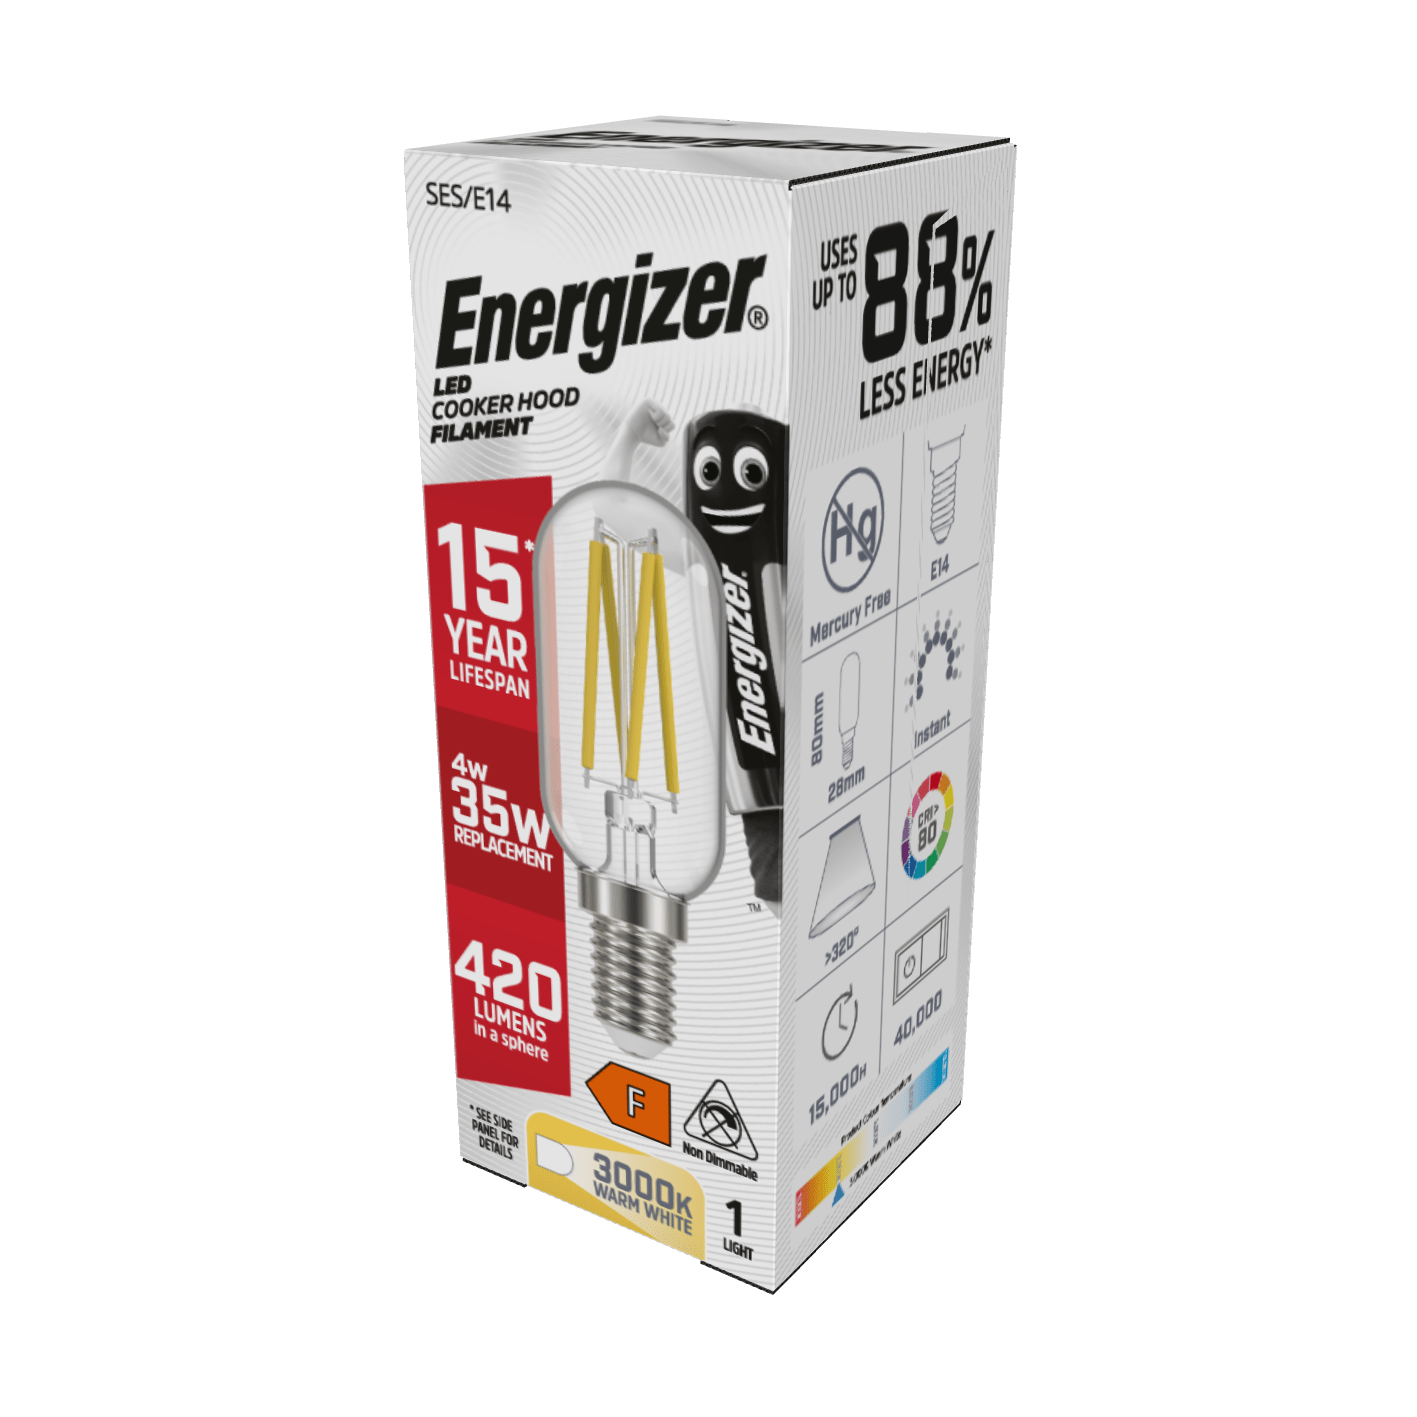 Lights  -  Energizer E14 Filament LED Cookerhood Warm White Lightbulb 35W  -  60003321